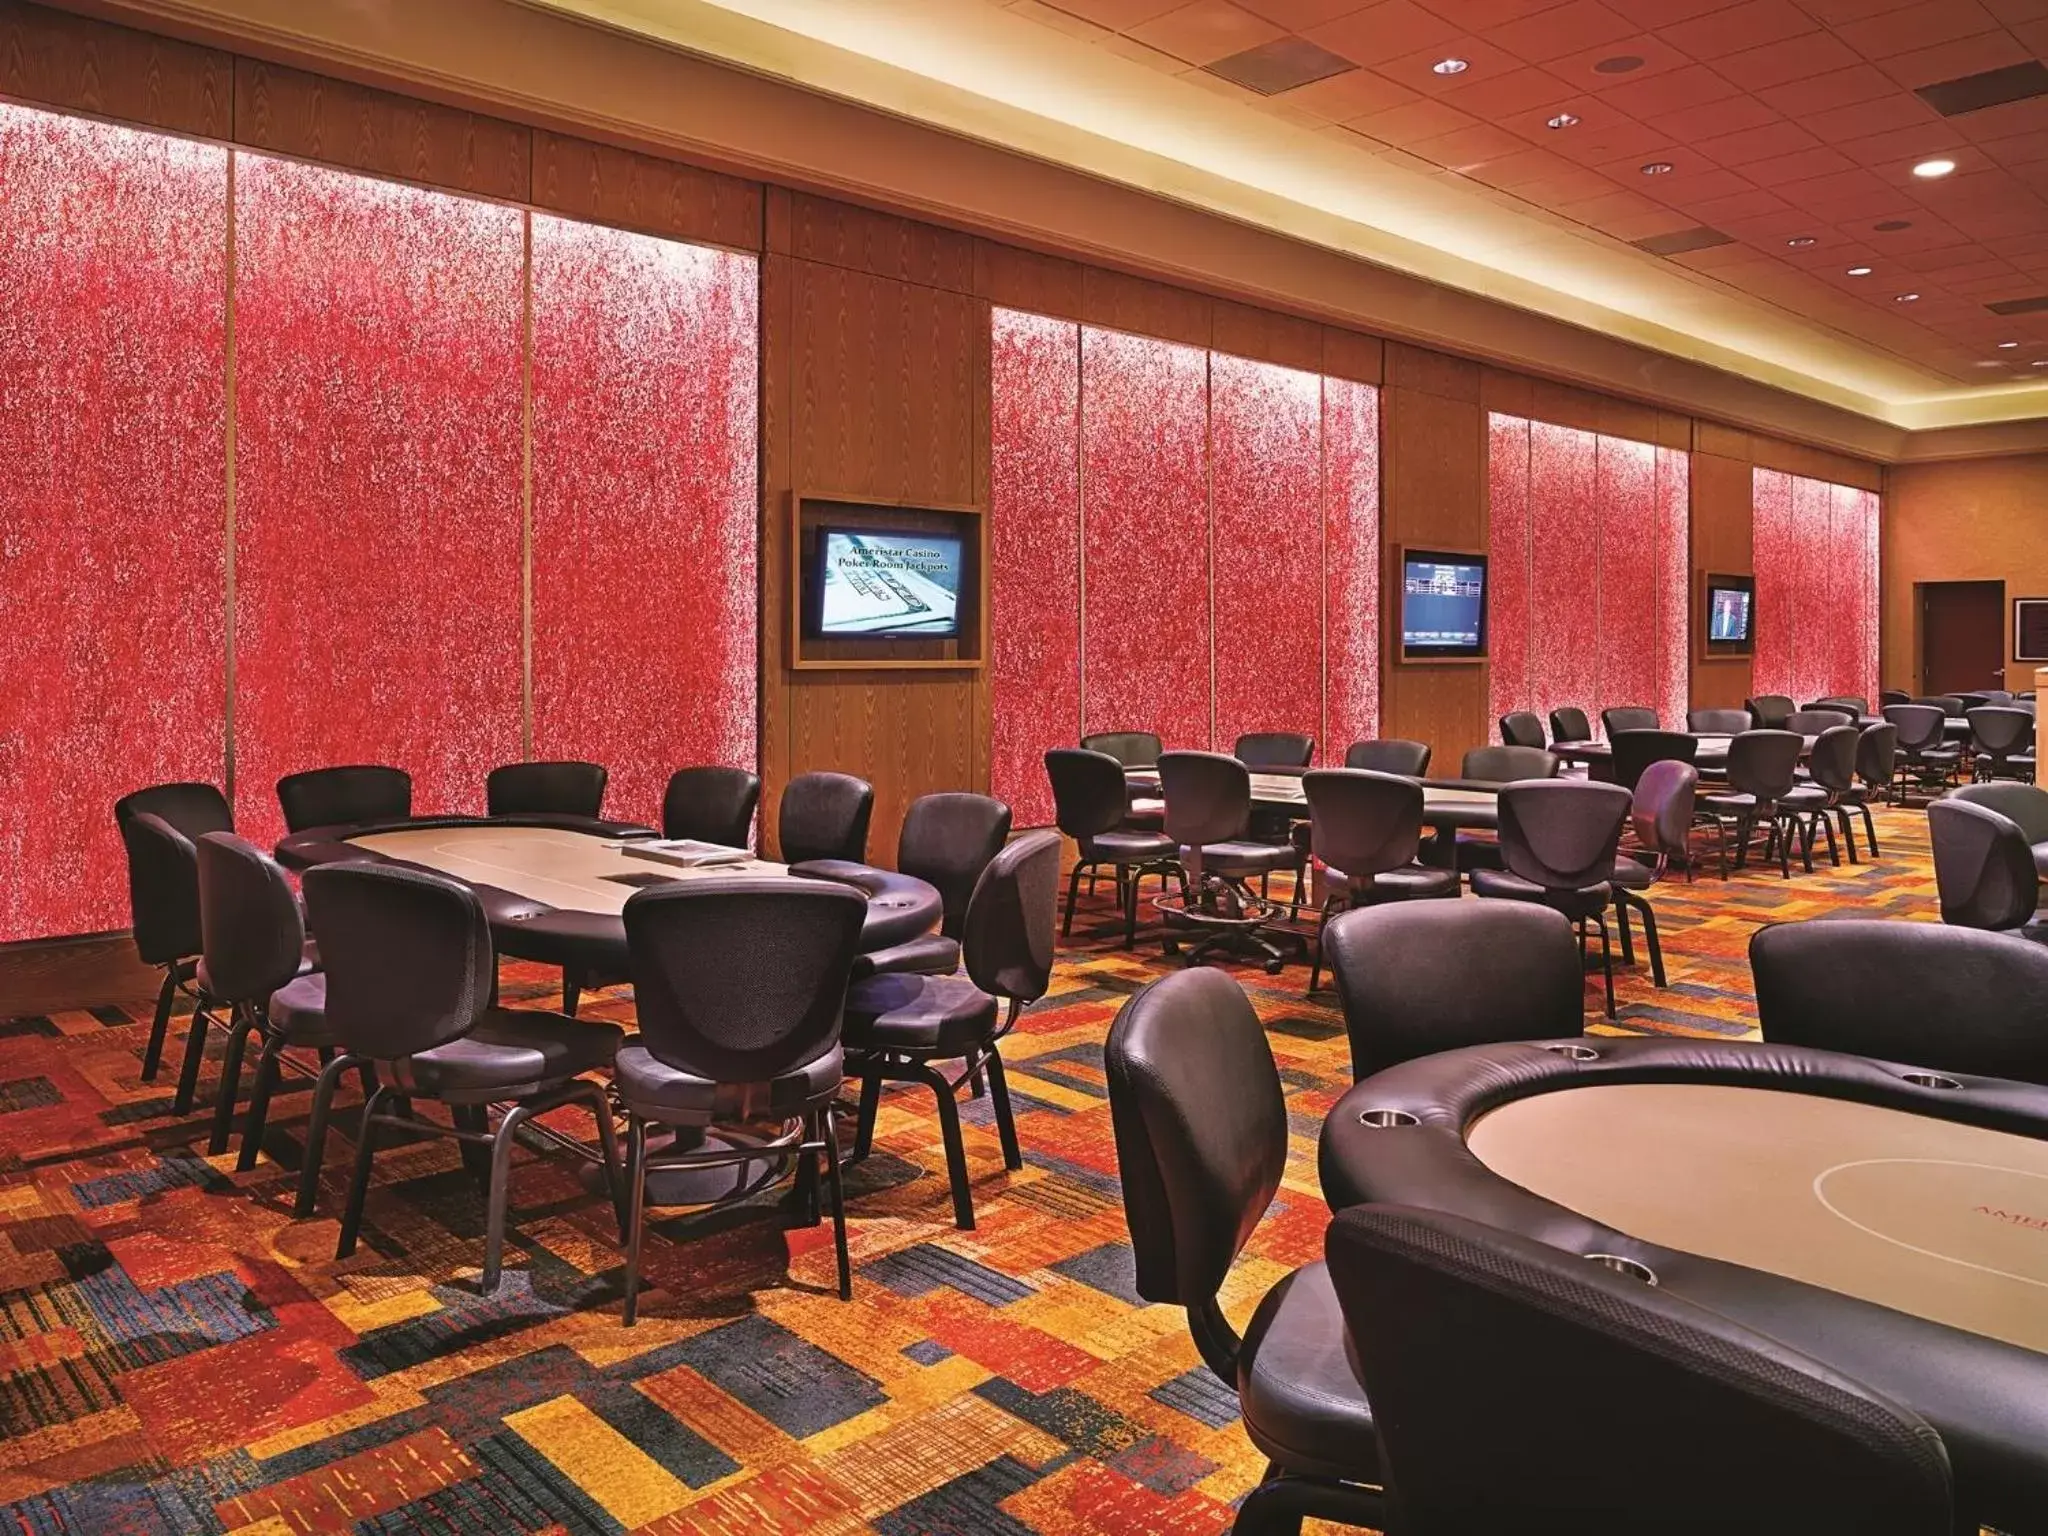 Seating area in Ameristar Casino Hotel Vicksburg, Ms.